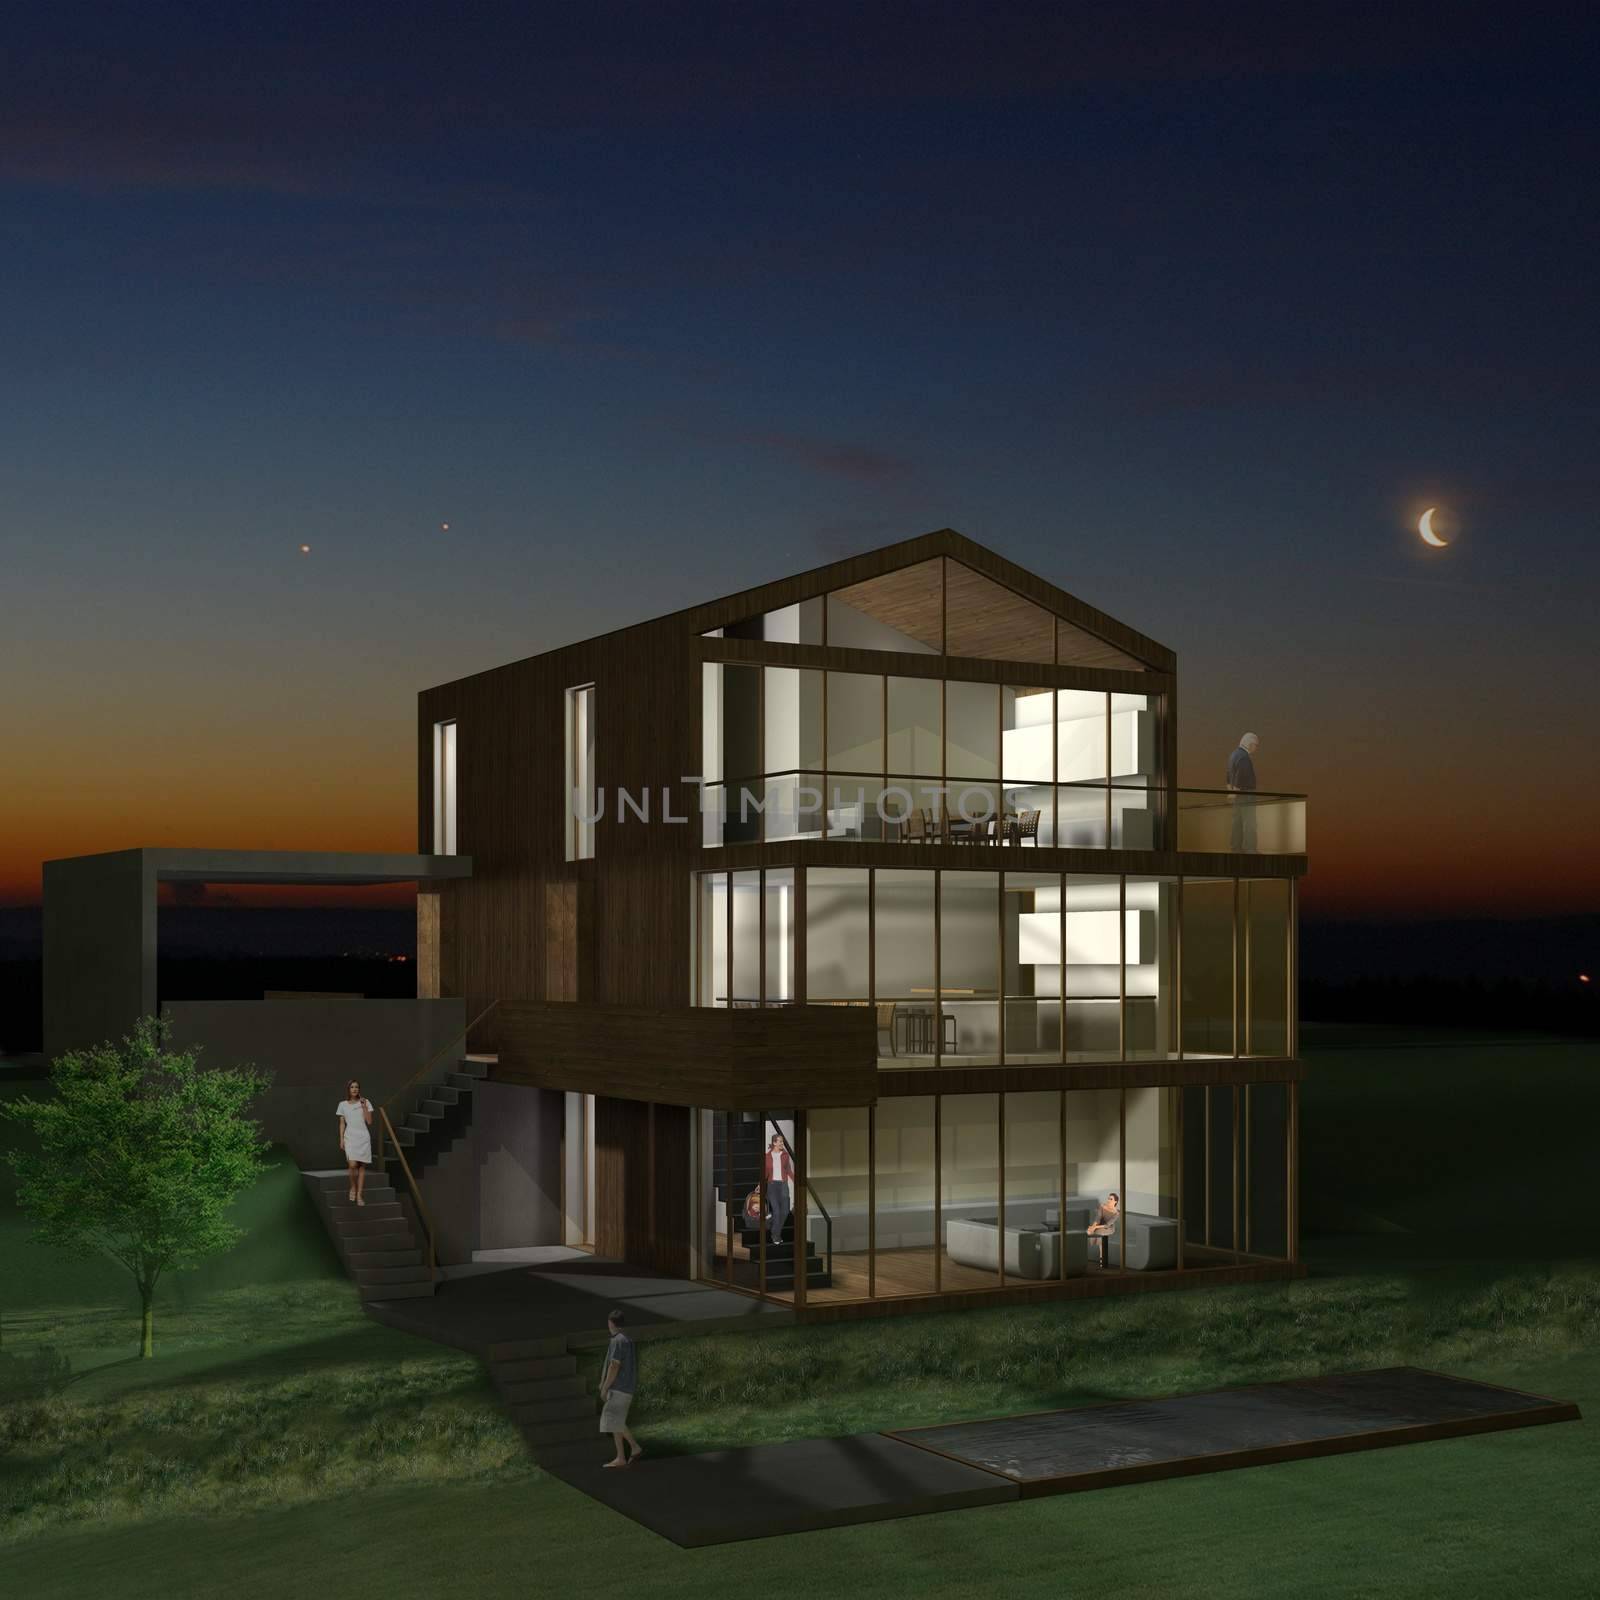 3D rendering of house by 3DAgentur